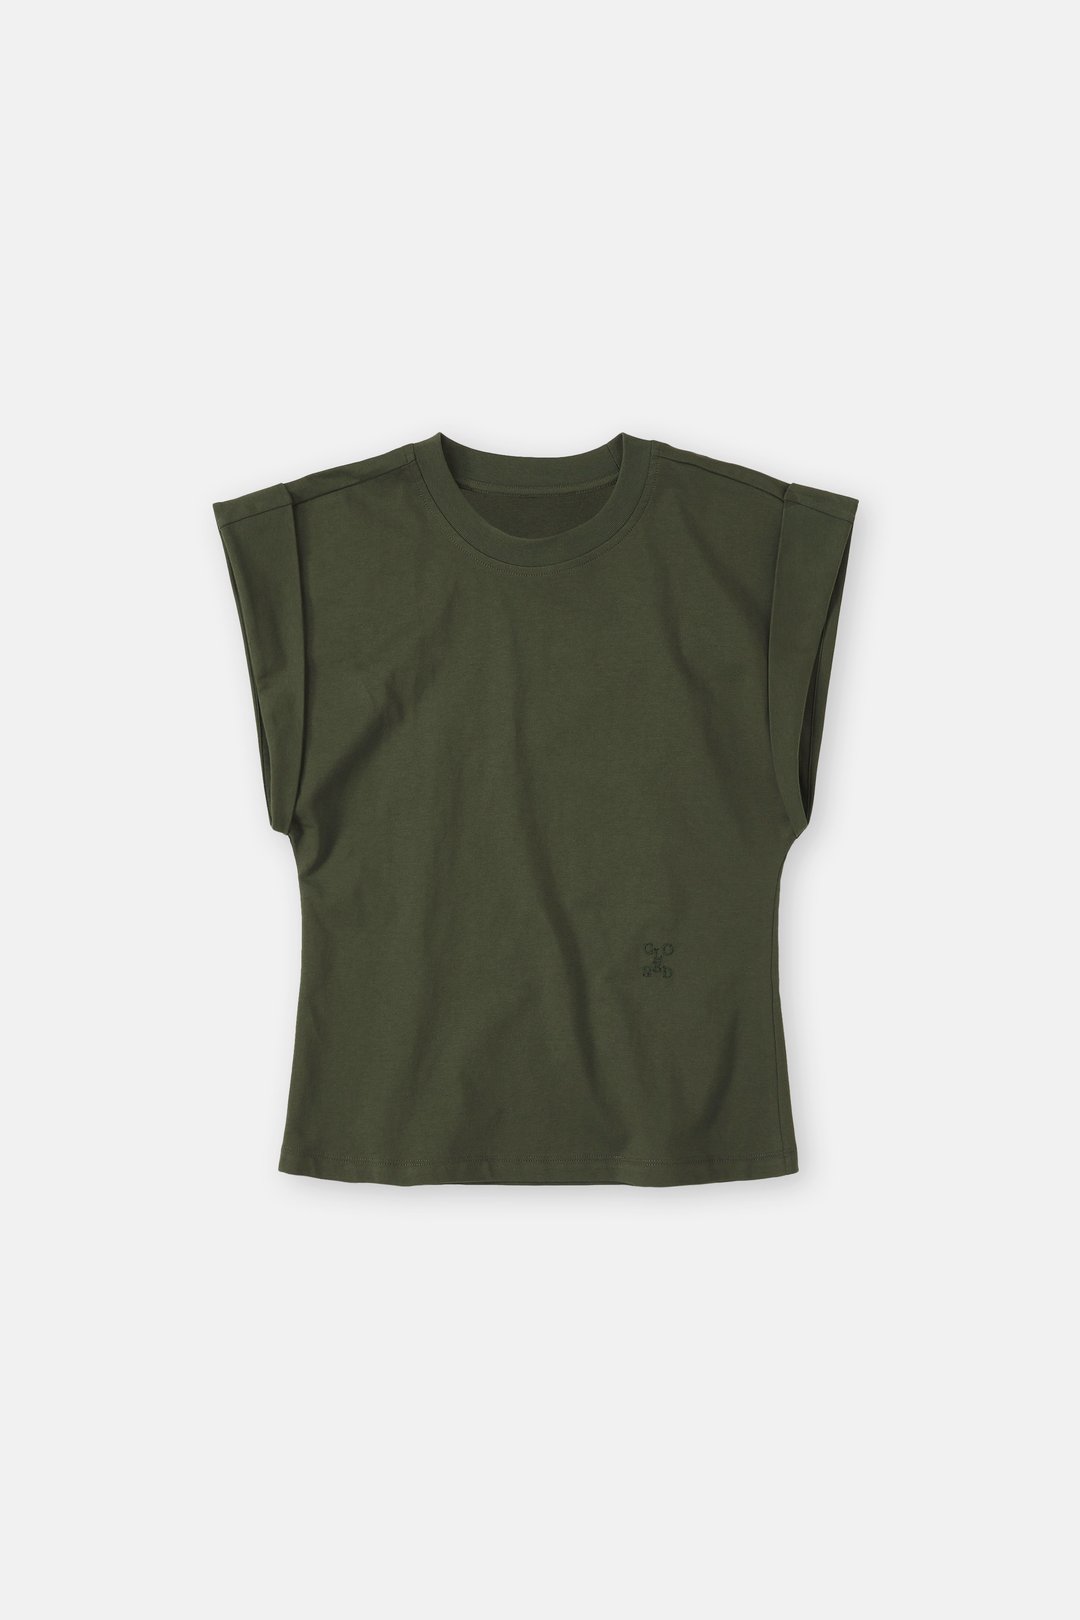 Tshirt Crewneck Sleevel C95612-44h-em Green-Weed